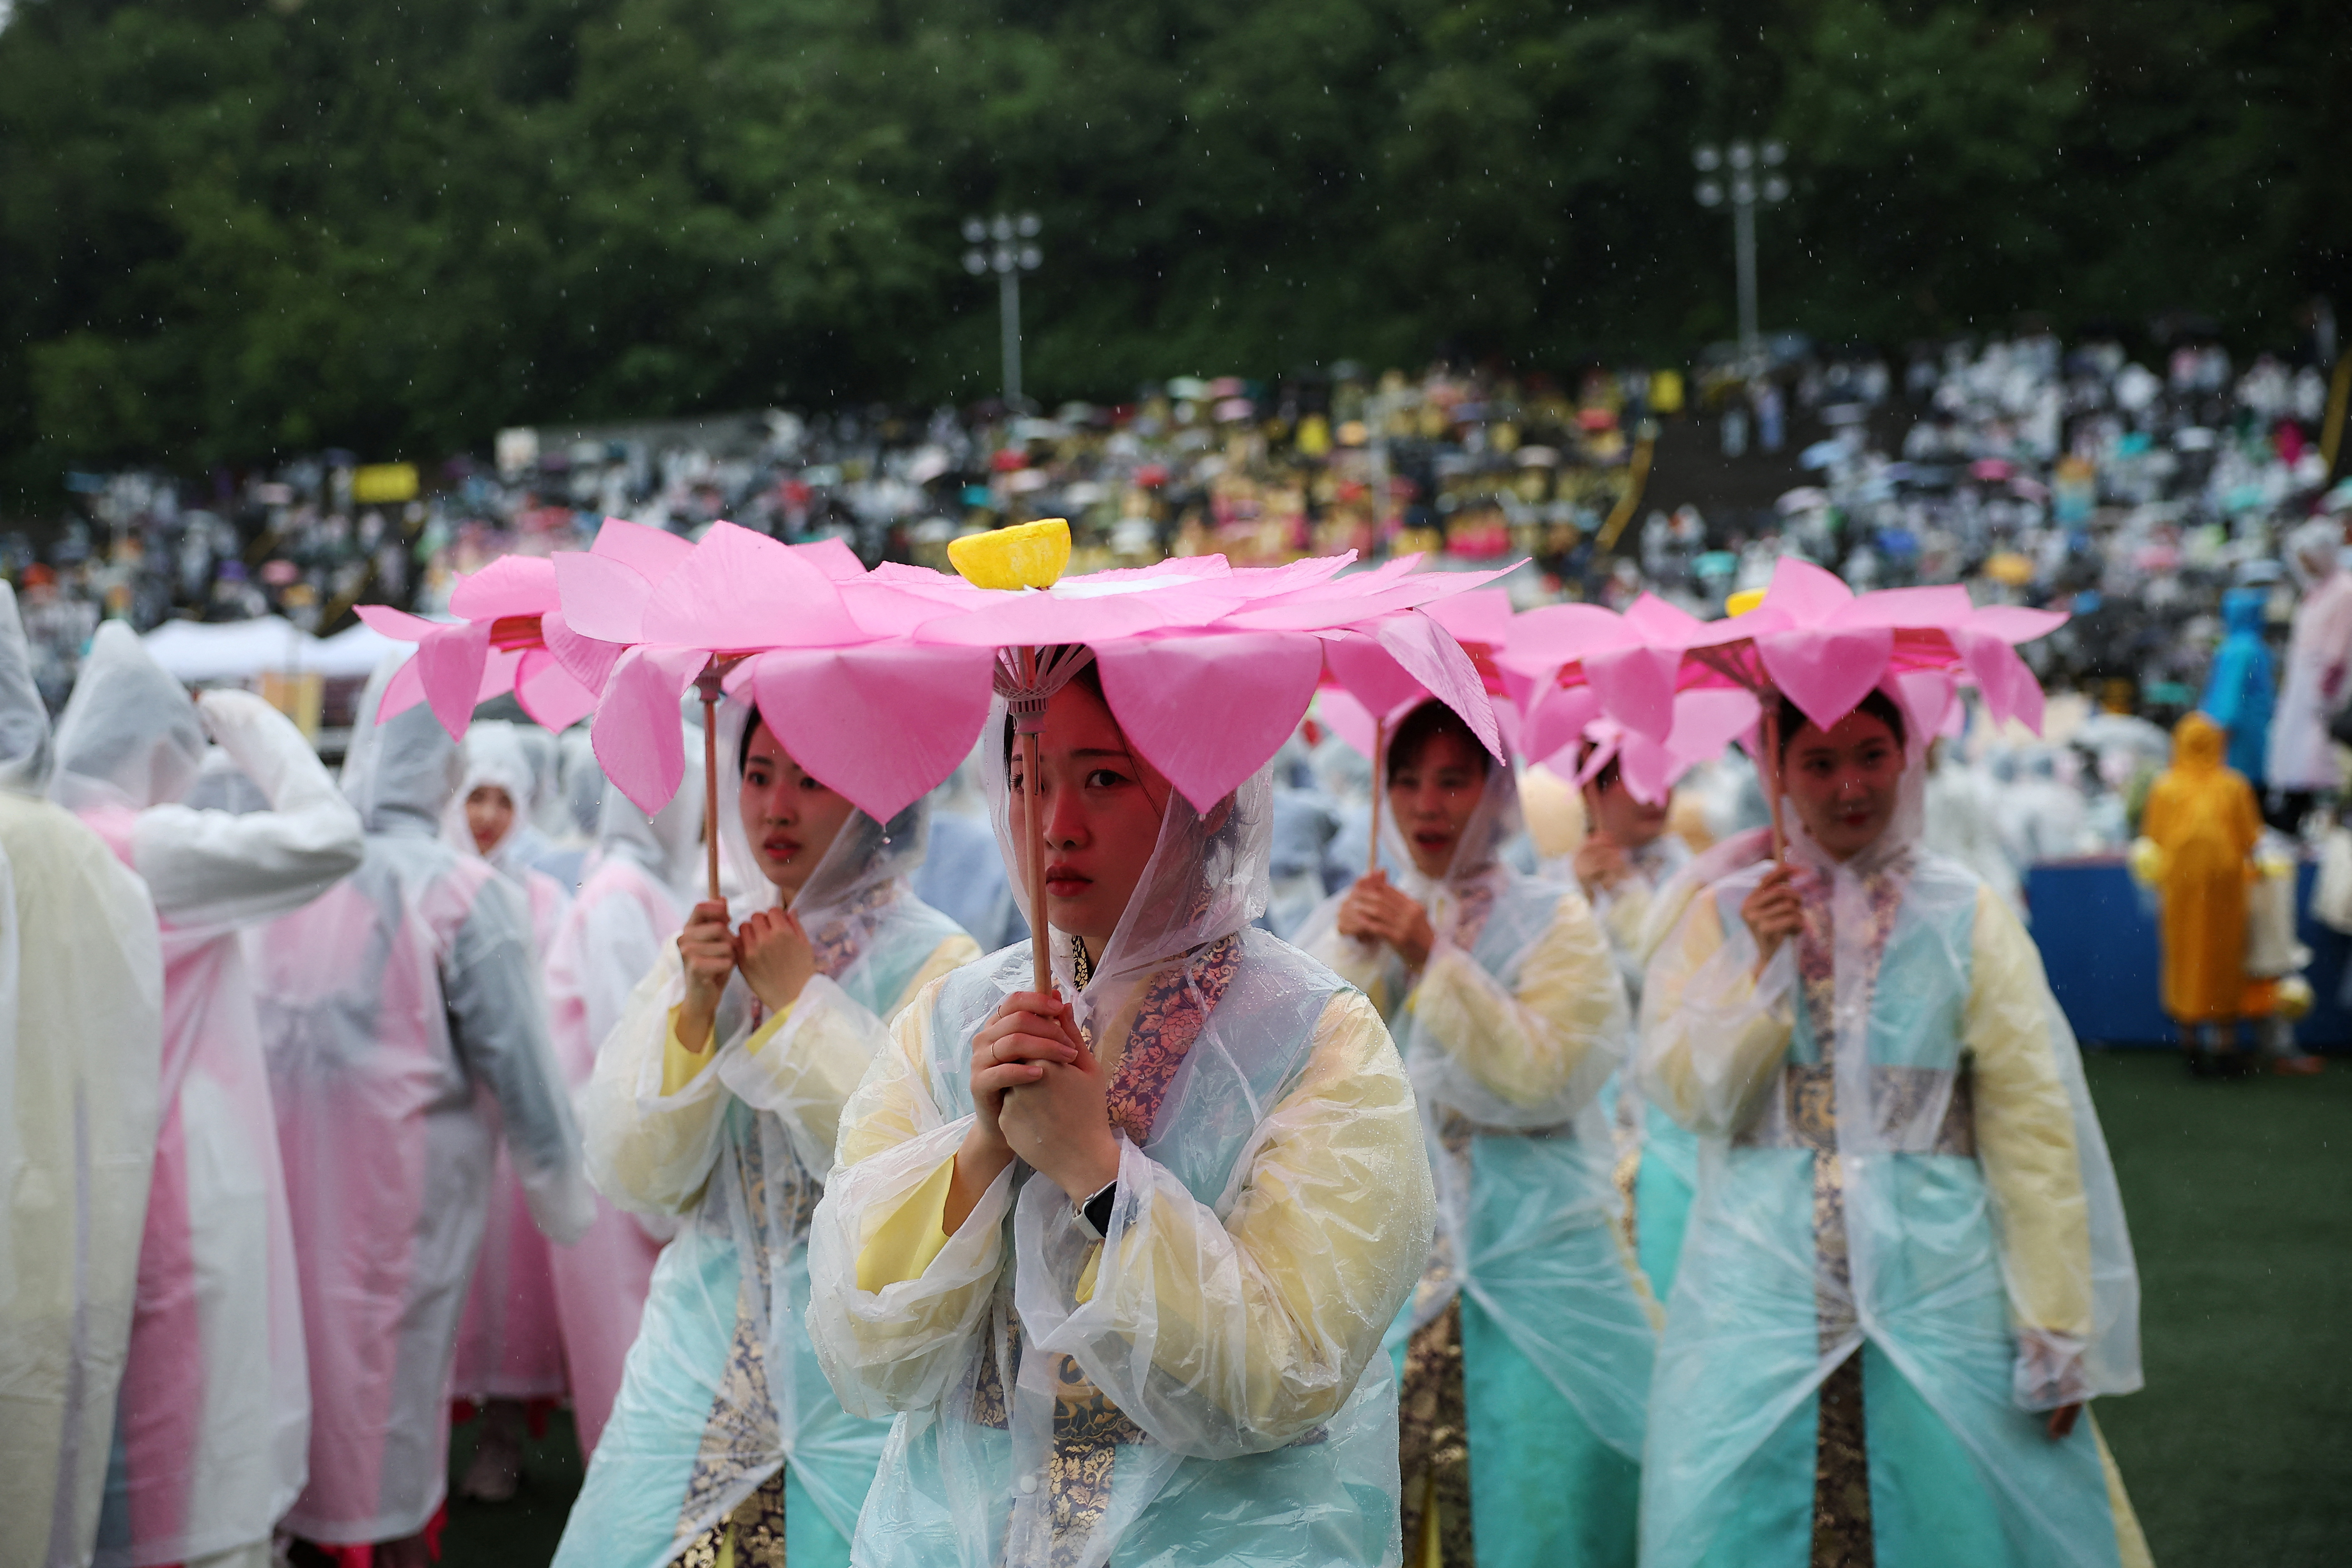 Lotus Lantern parade in celebration of the upcoming birthday of Buddha, in Seoul